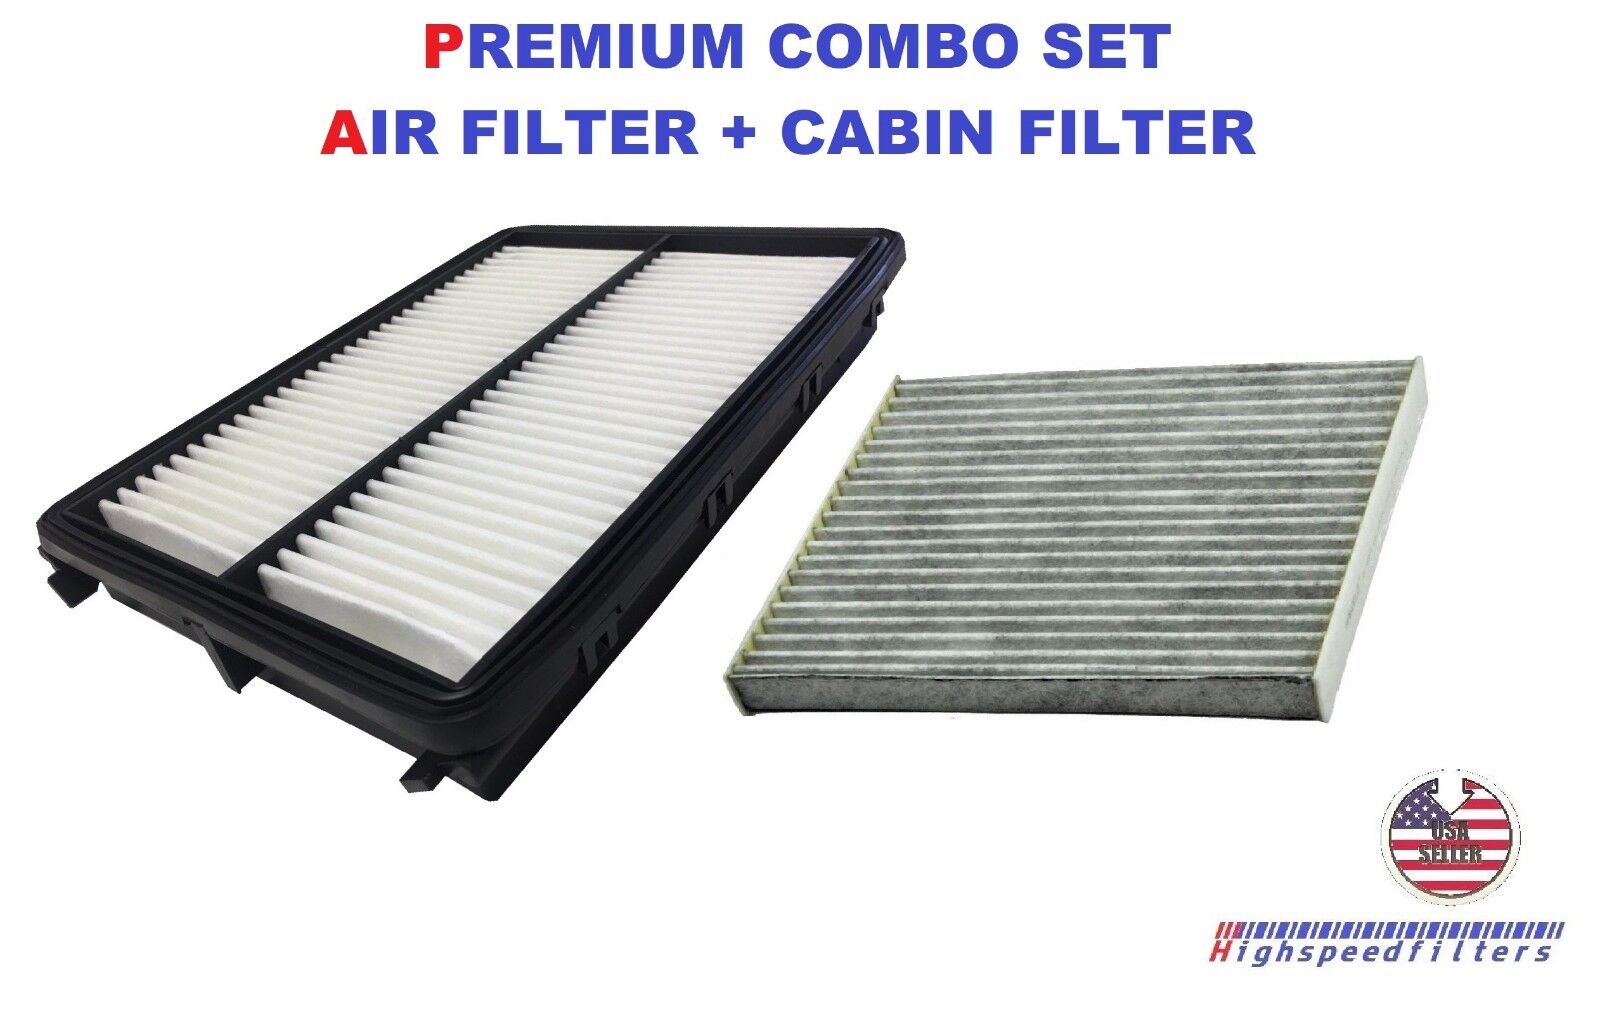 PREMIUM COMBO AIR FILTER + CHARCOAL CABIN FILTER for 2015 - 2021 KIA SEDONA